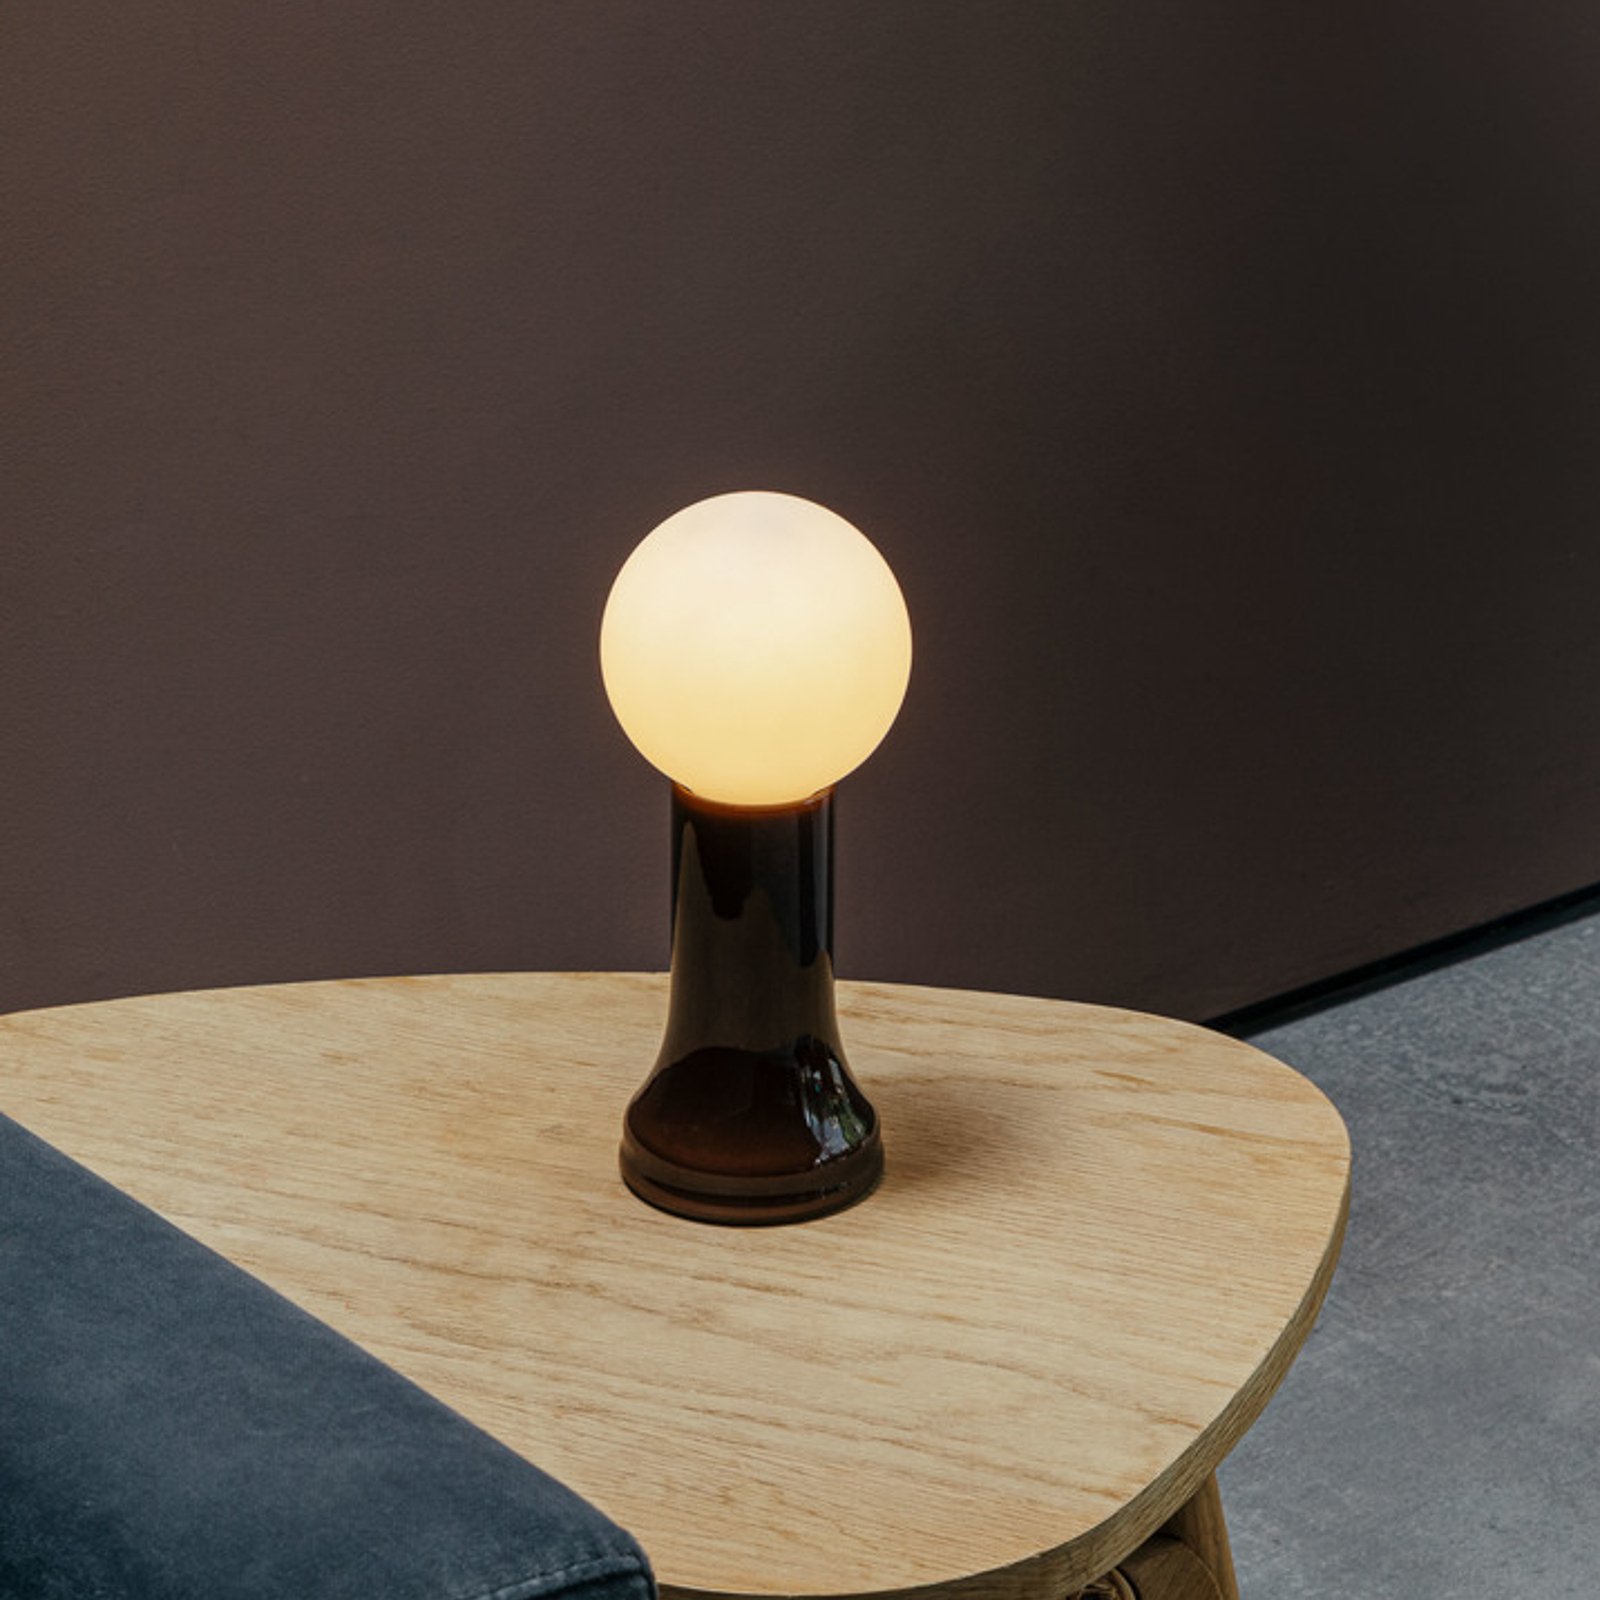 Tala stolna lampa Shore, staklo, E27 LED lampa Globe, smeđa